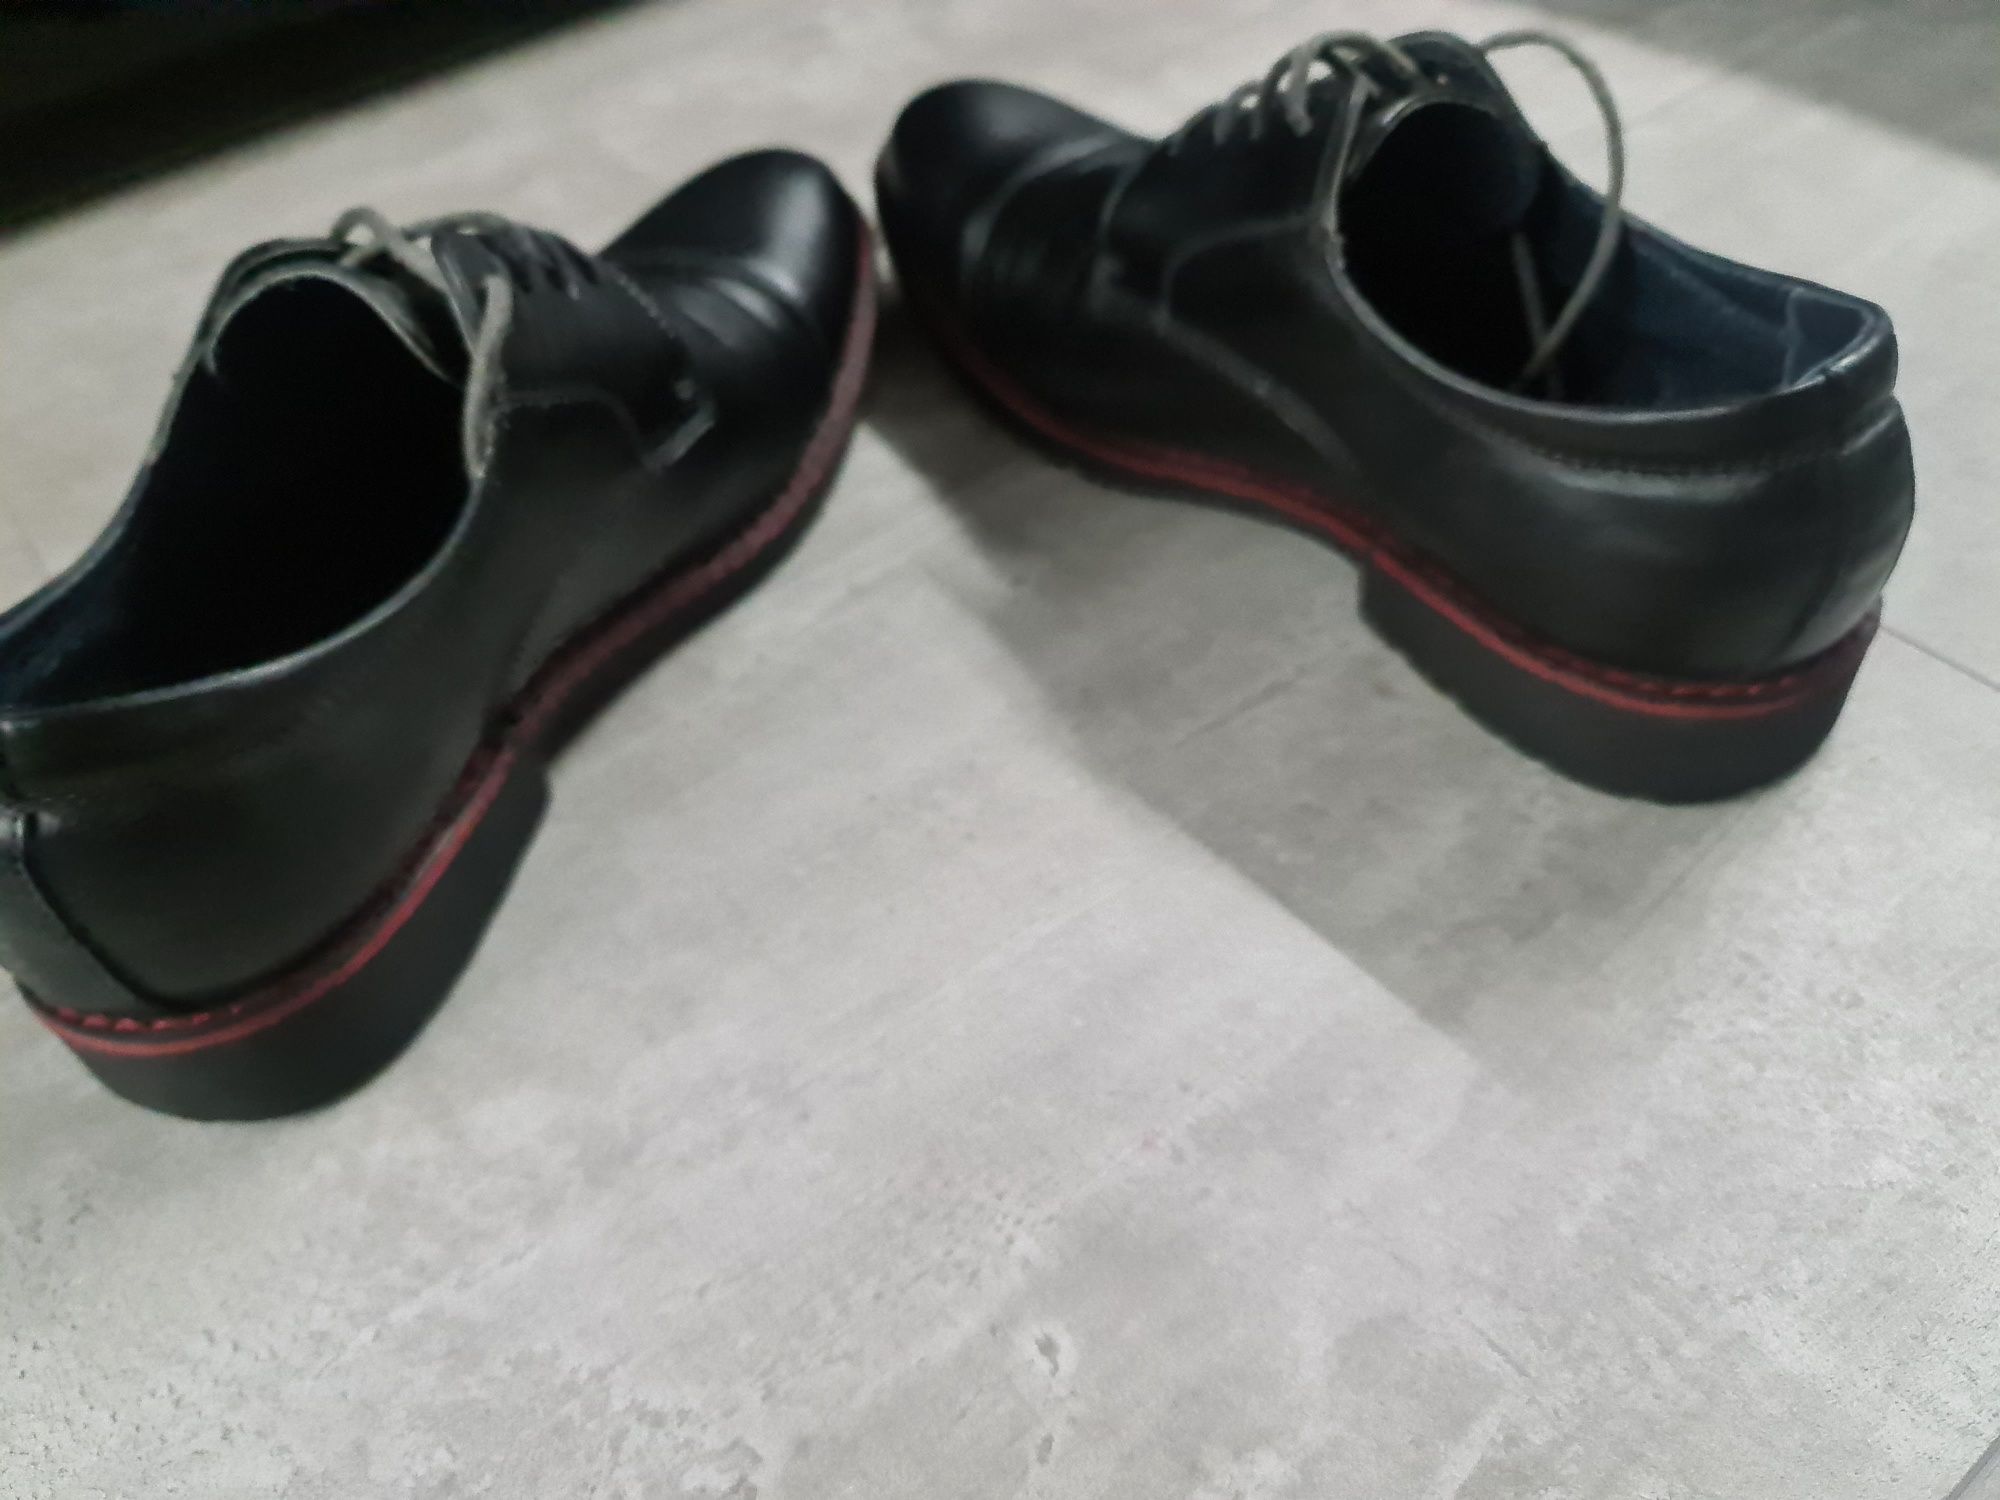 Vapiano pantofle męskie czarne r. 42 wkładka 29 cm